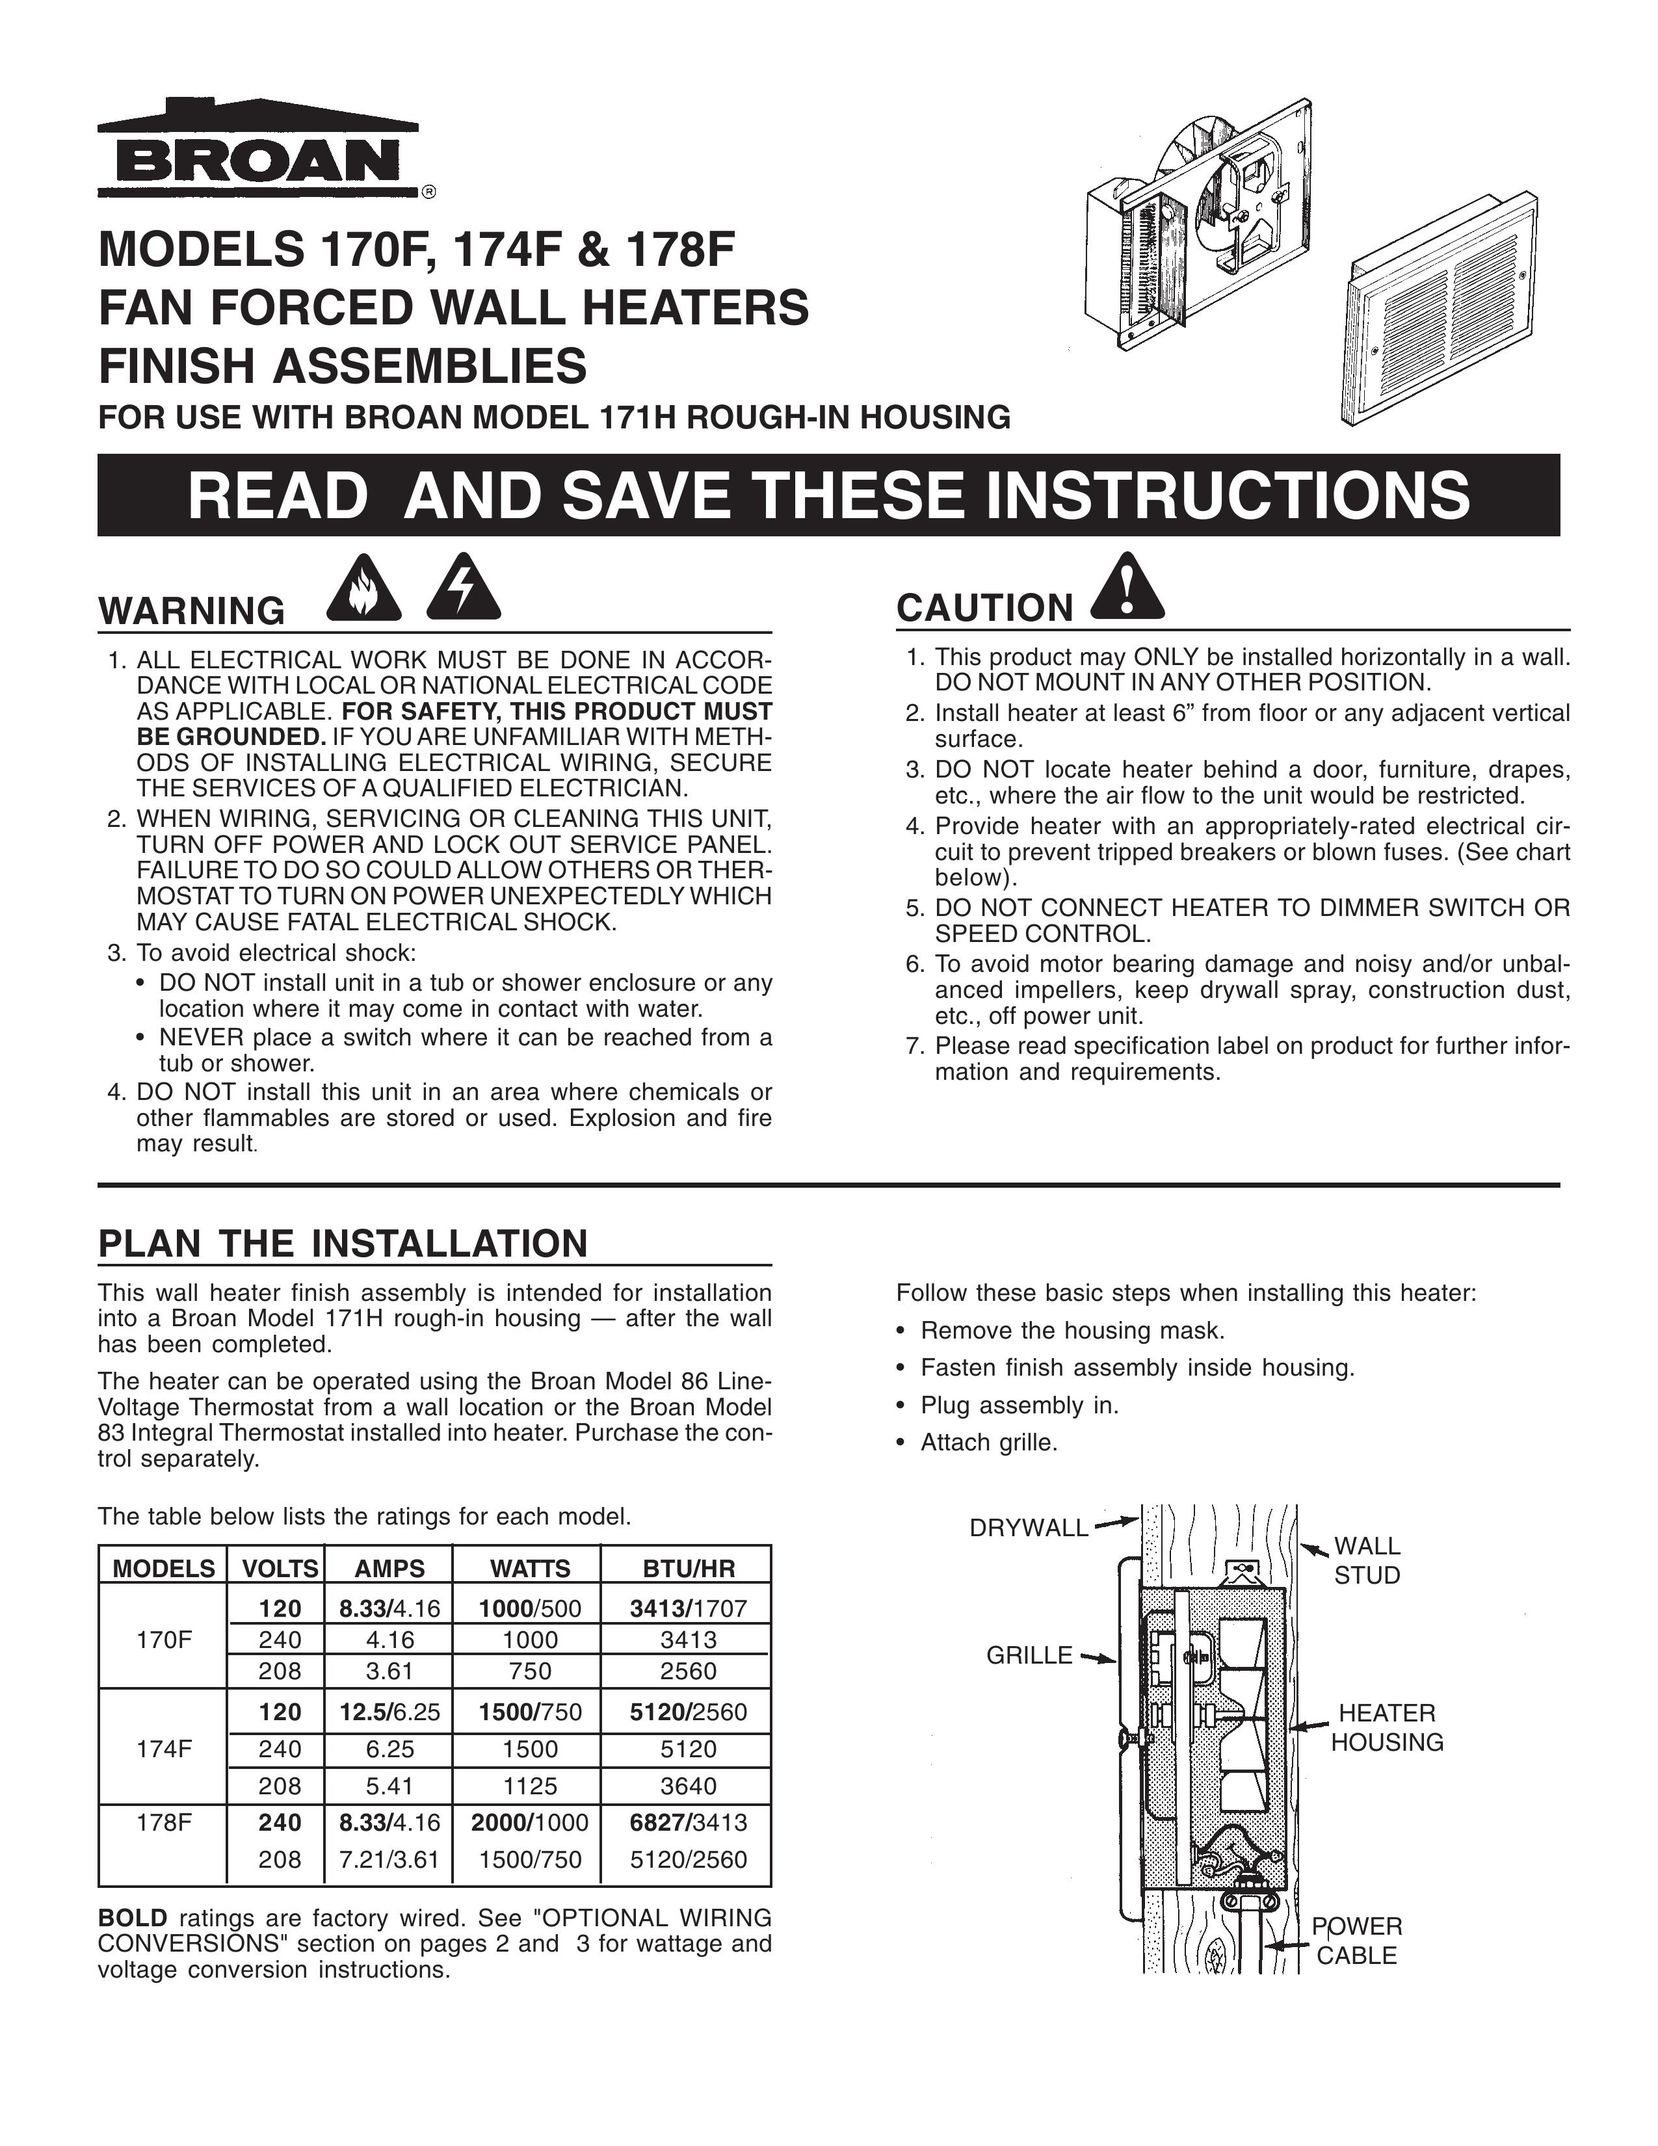 Broan 174F Air Conditioner User Manual